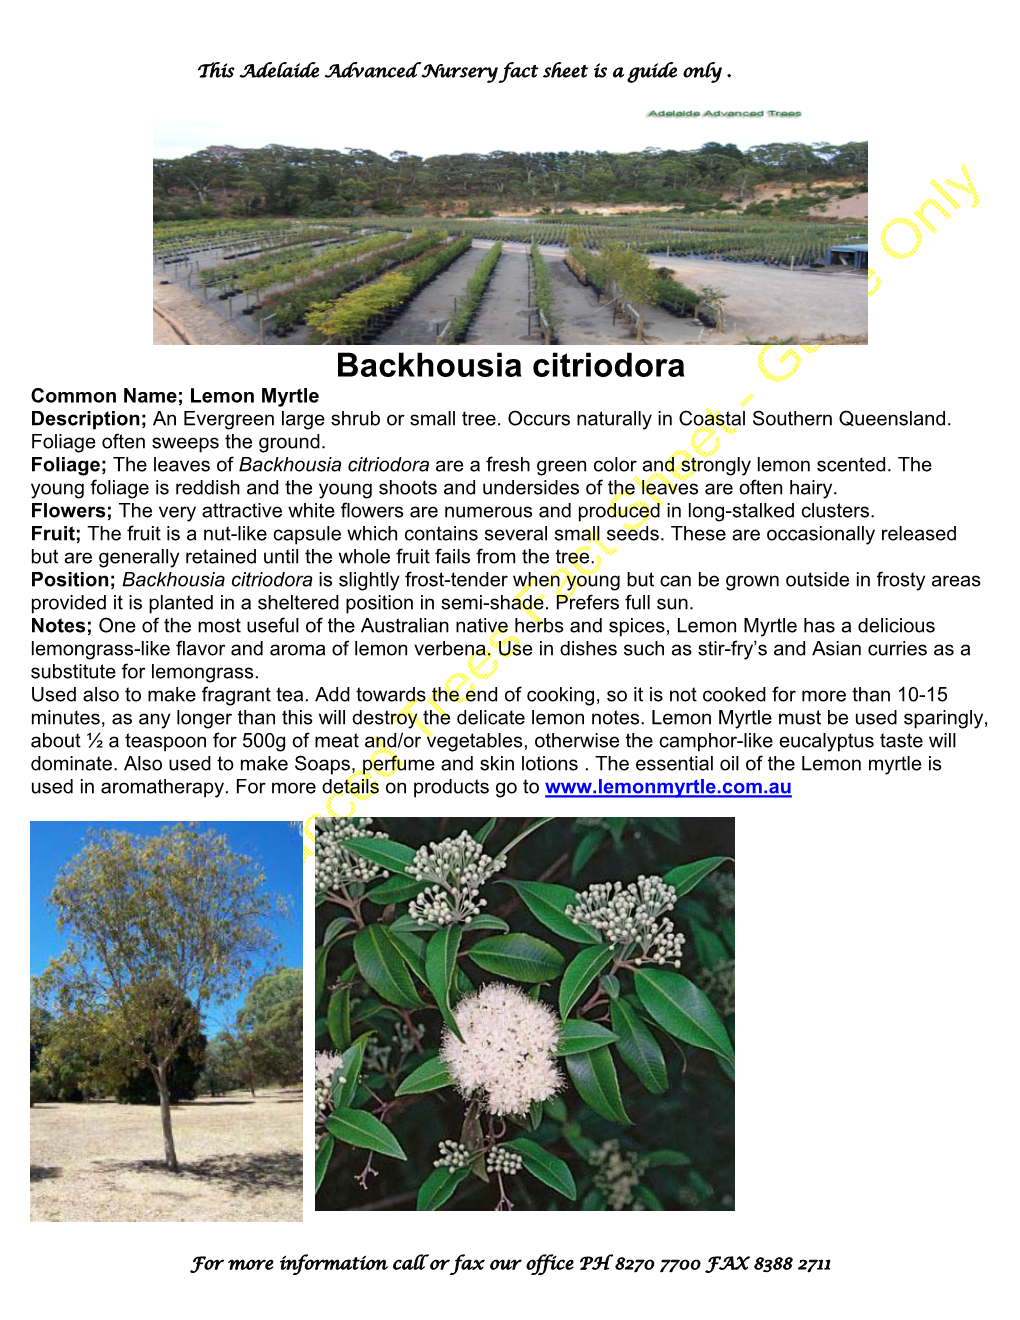 Backhousia Citriodora Common Name; Lemon Myrtle Description; an Evergreen Large Shrub Or Small Tree